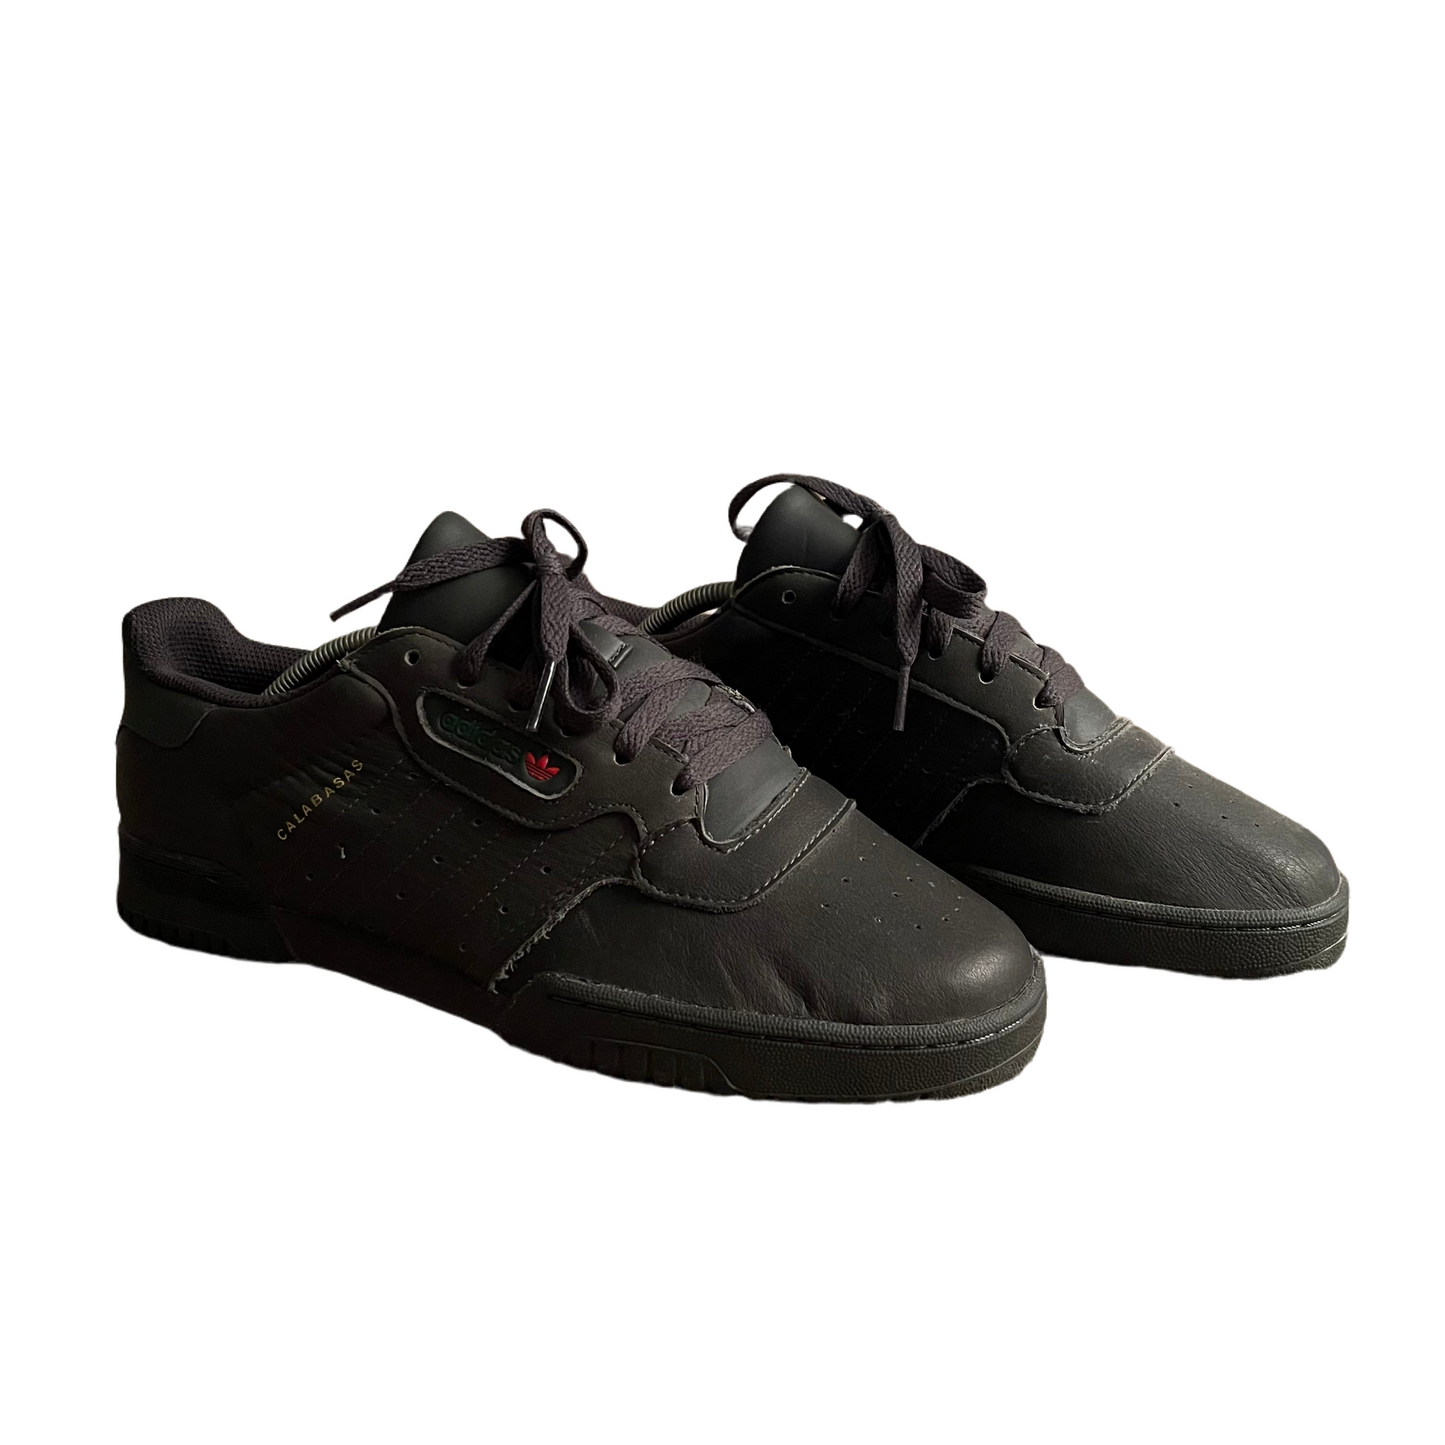 YEEZY Powerphase Calabasas "Core Black" Sneakers (US 11)